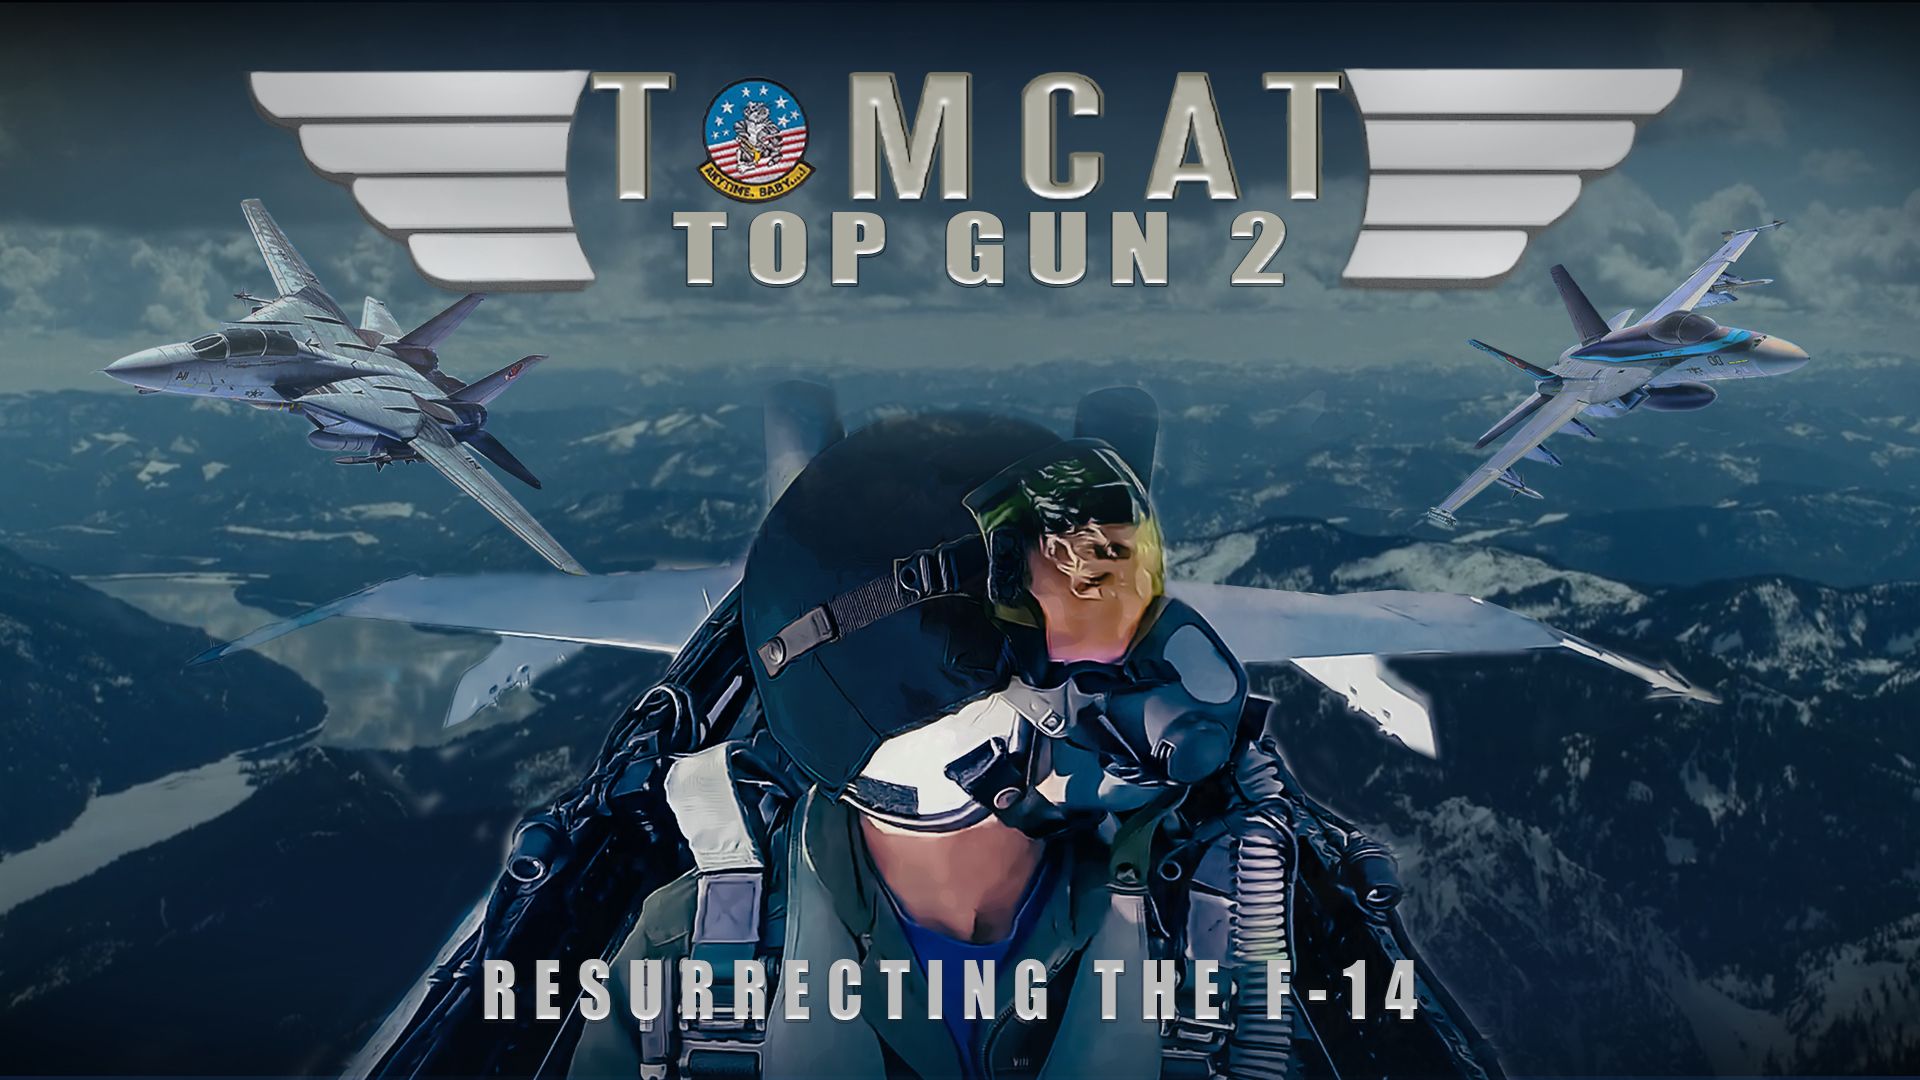 Tomcat: Top Gun 2 Resurrecting the F-14